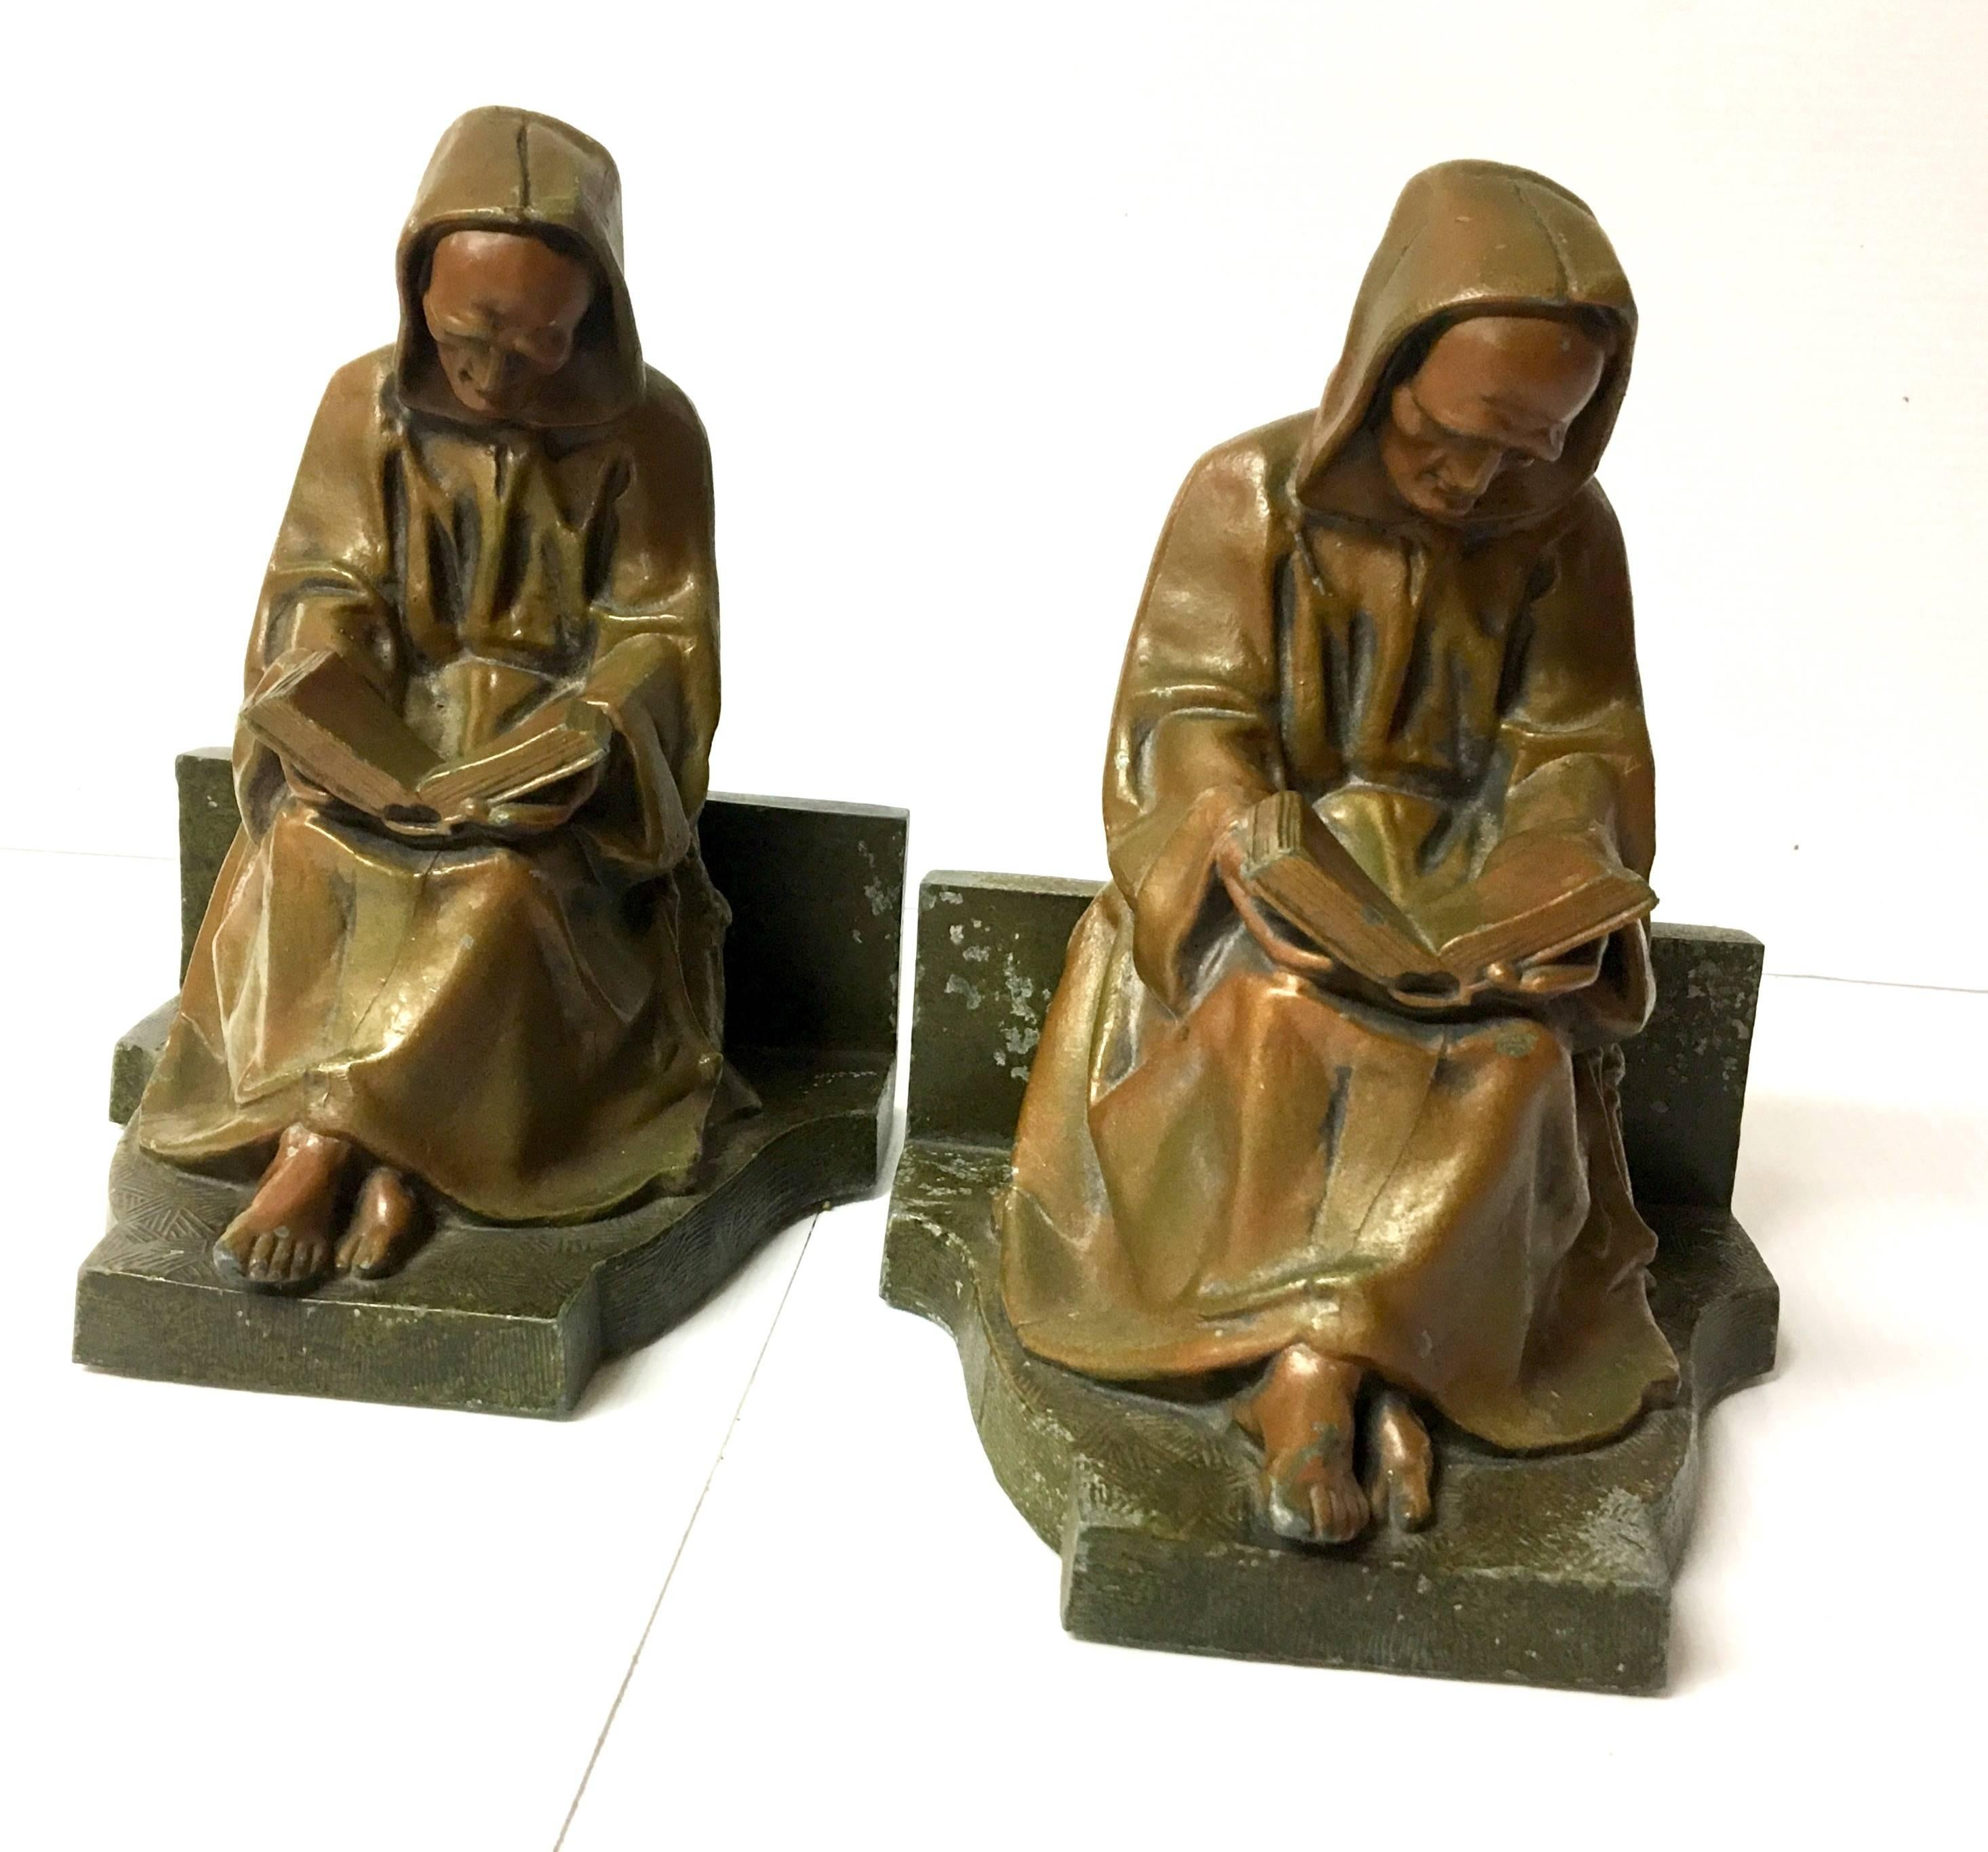 Renaissance Antique Pair of Monk Reading/Scholar Bookends in Bronze Finish